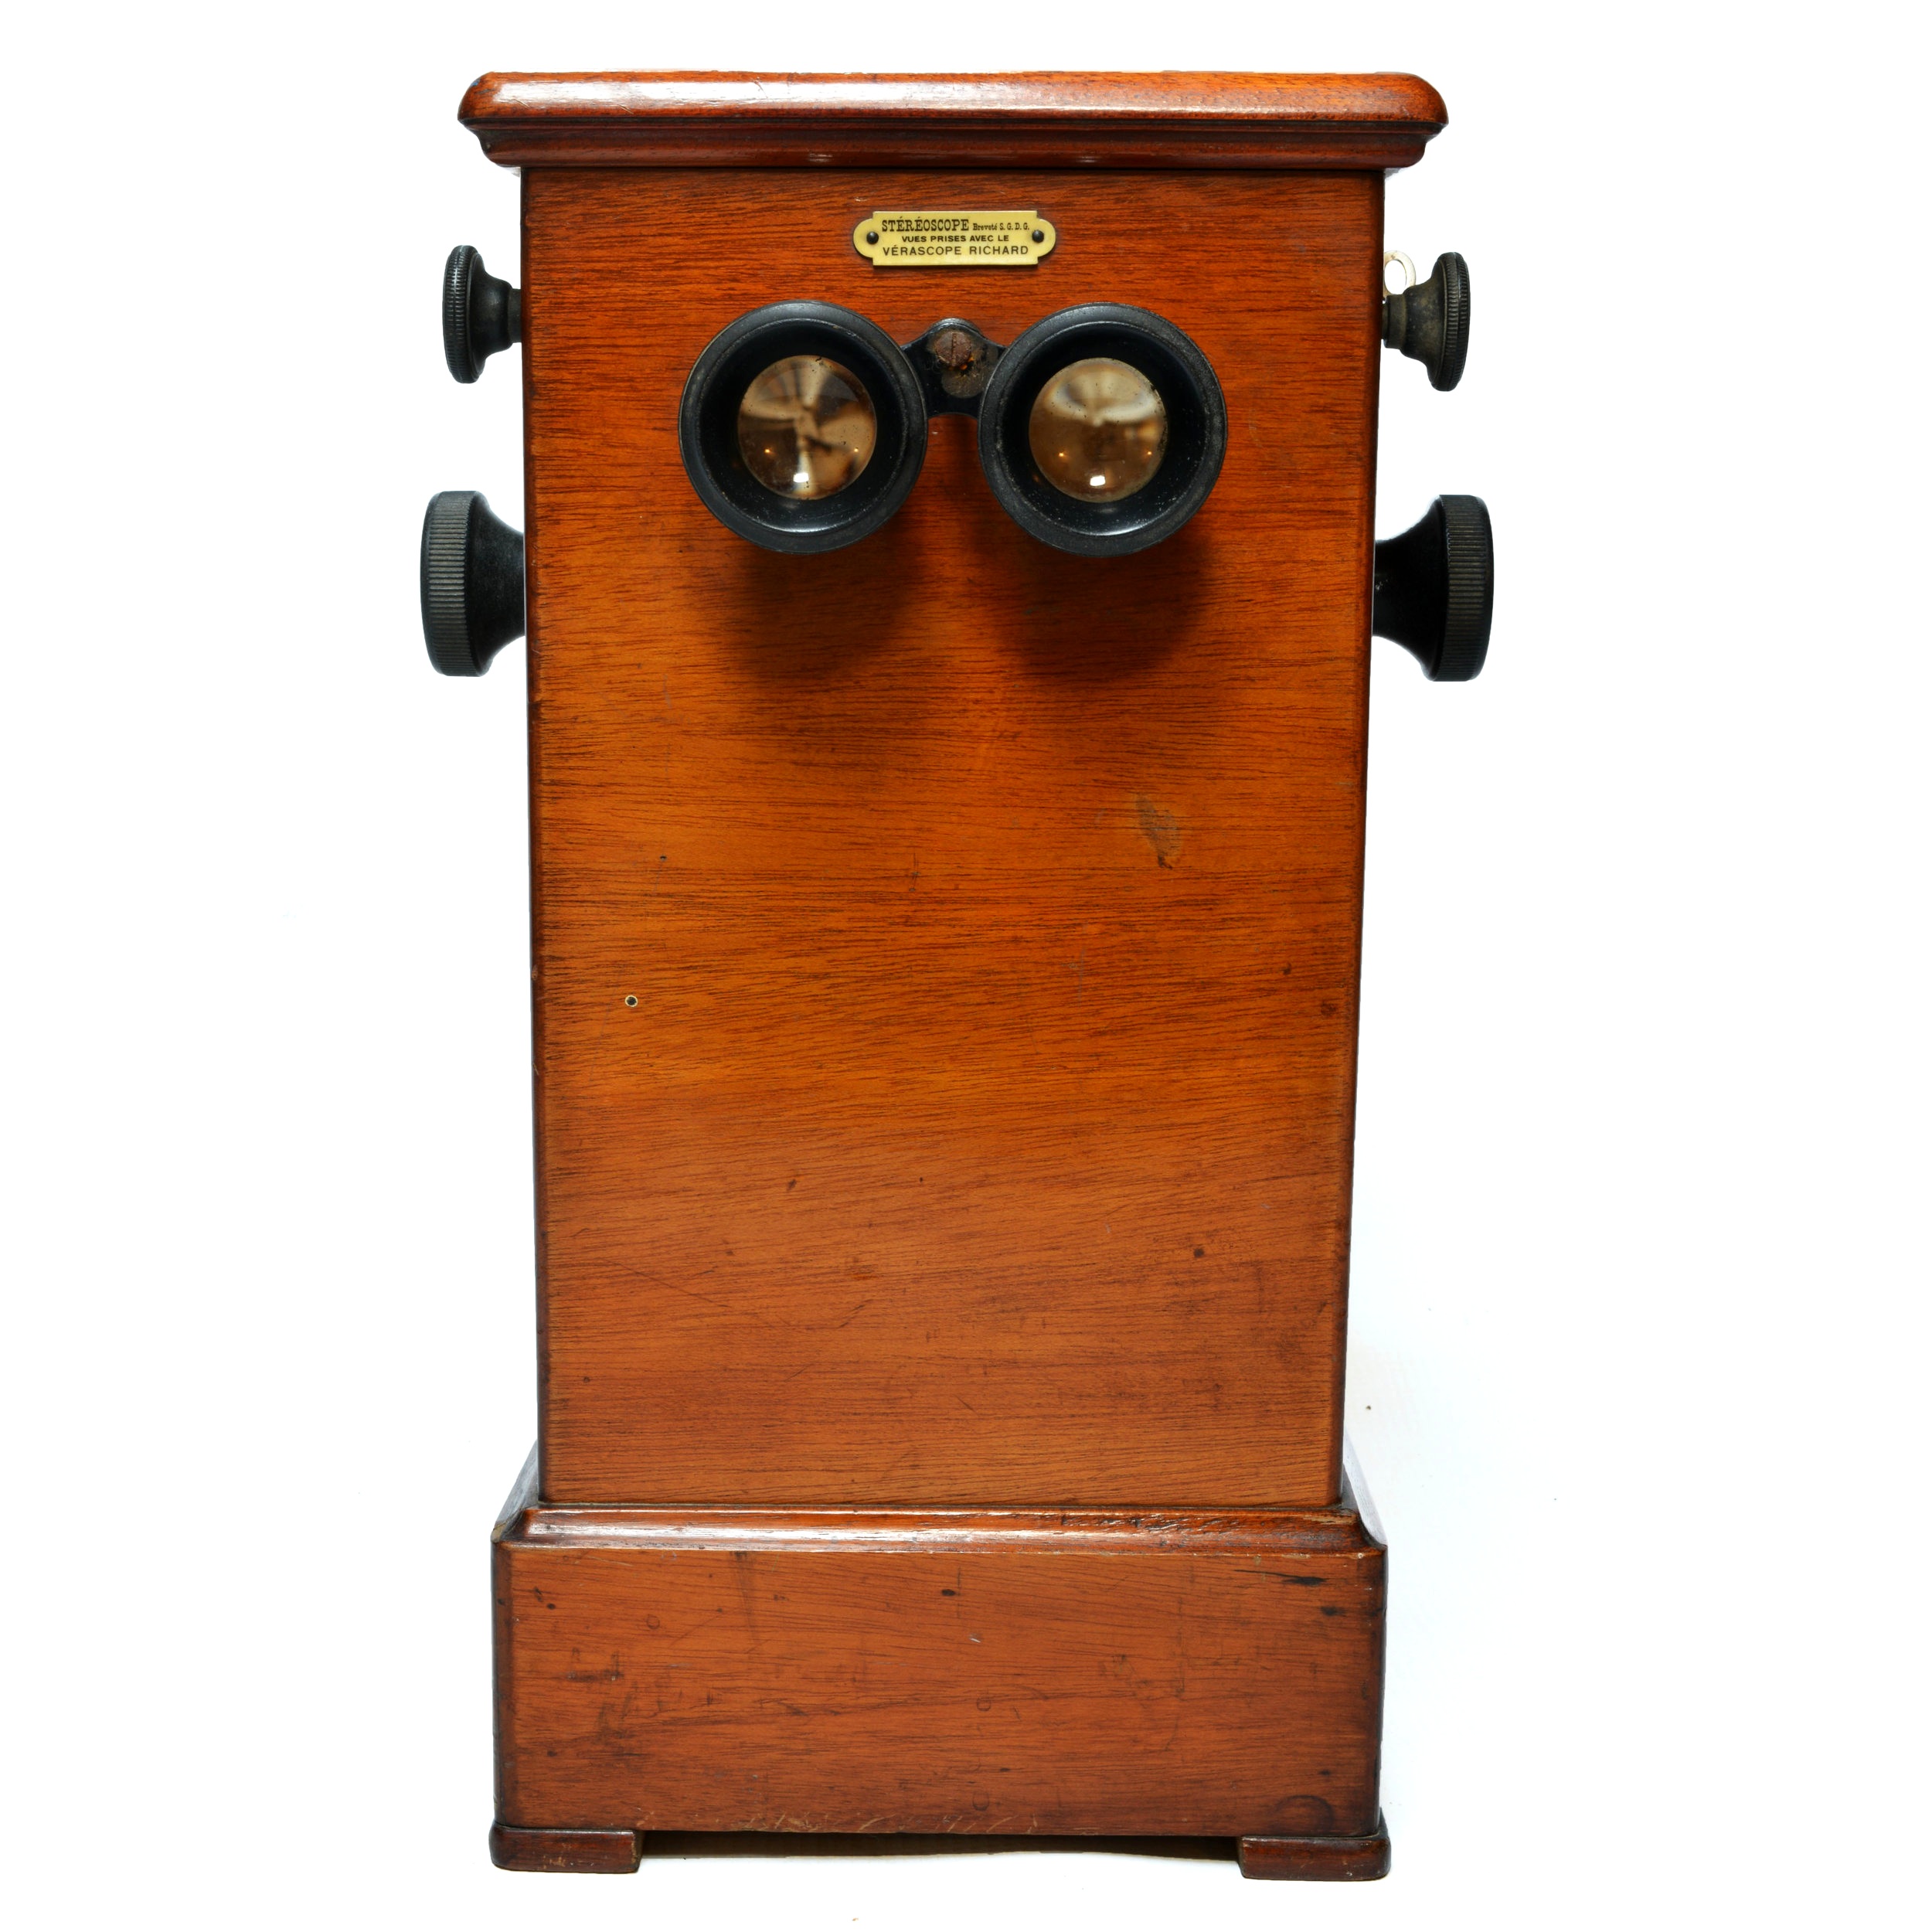 Jules Richard Verascope stereoscope